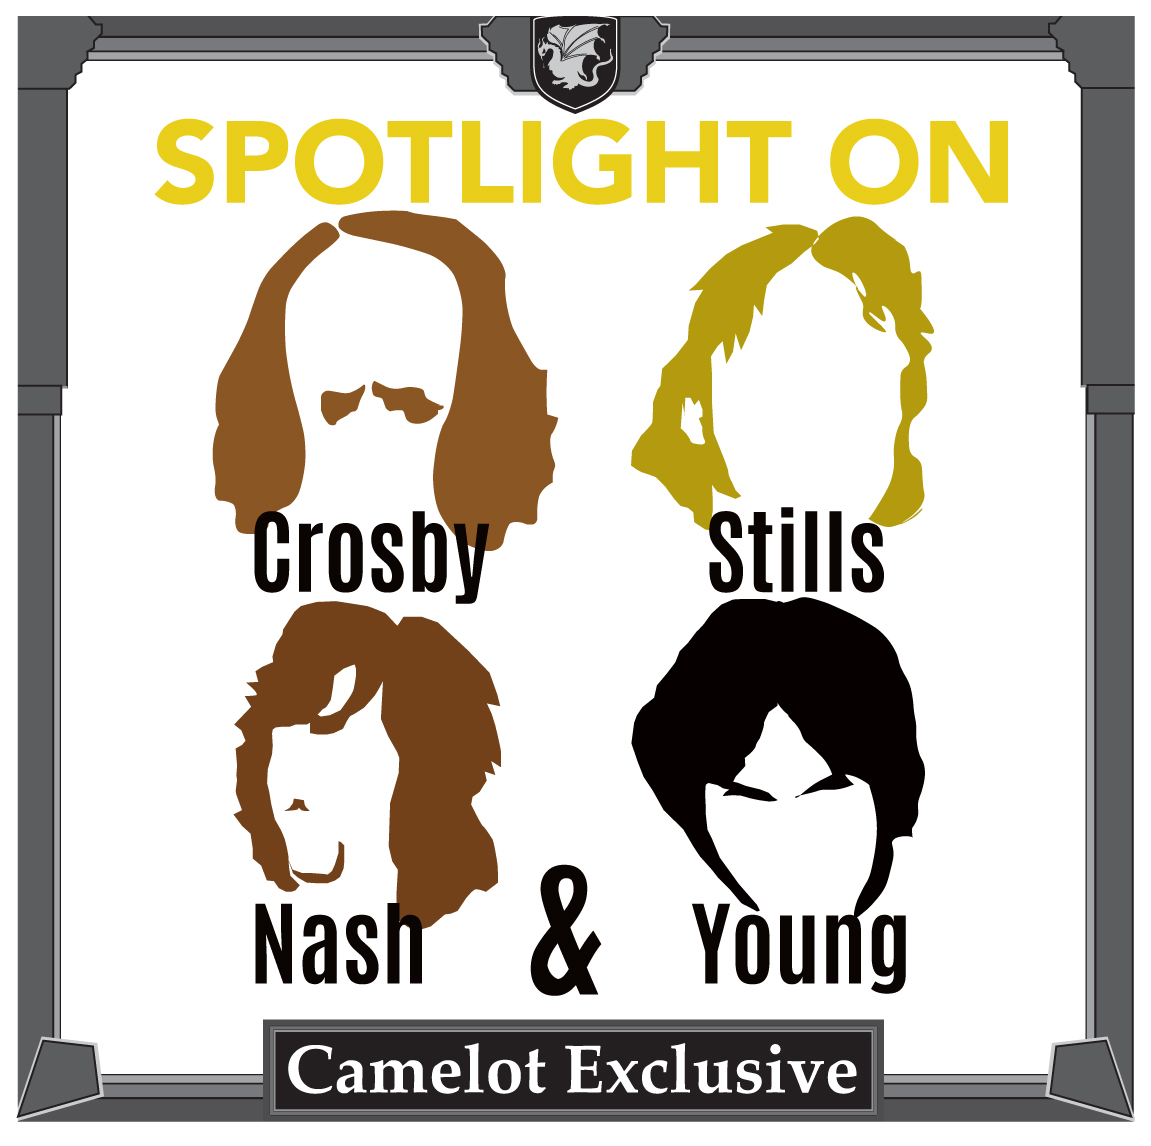 2020 Spotlight On Crosby Stills Nash Young Camelot Theatre